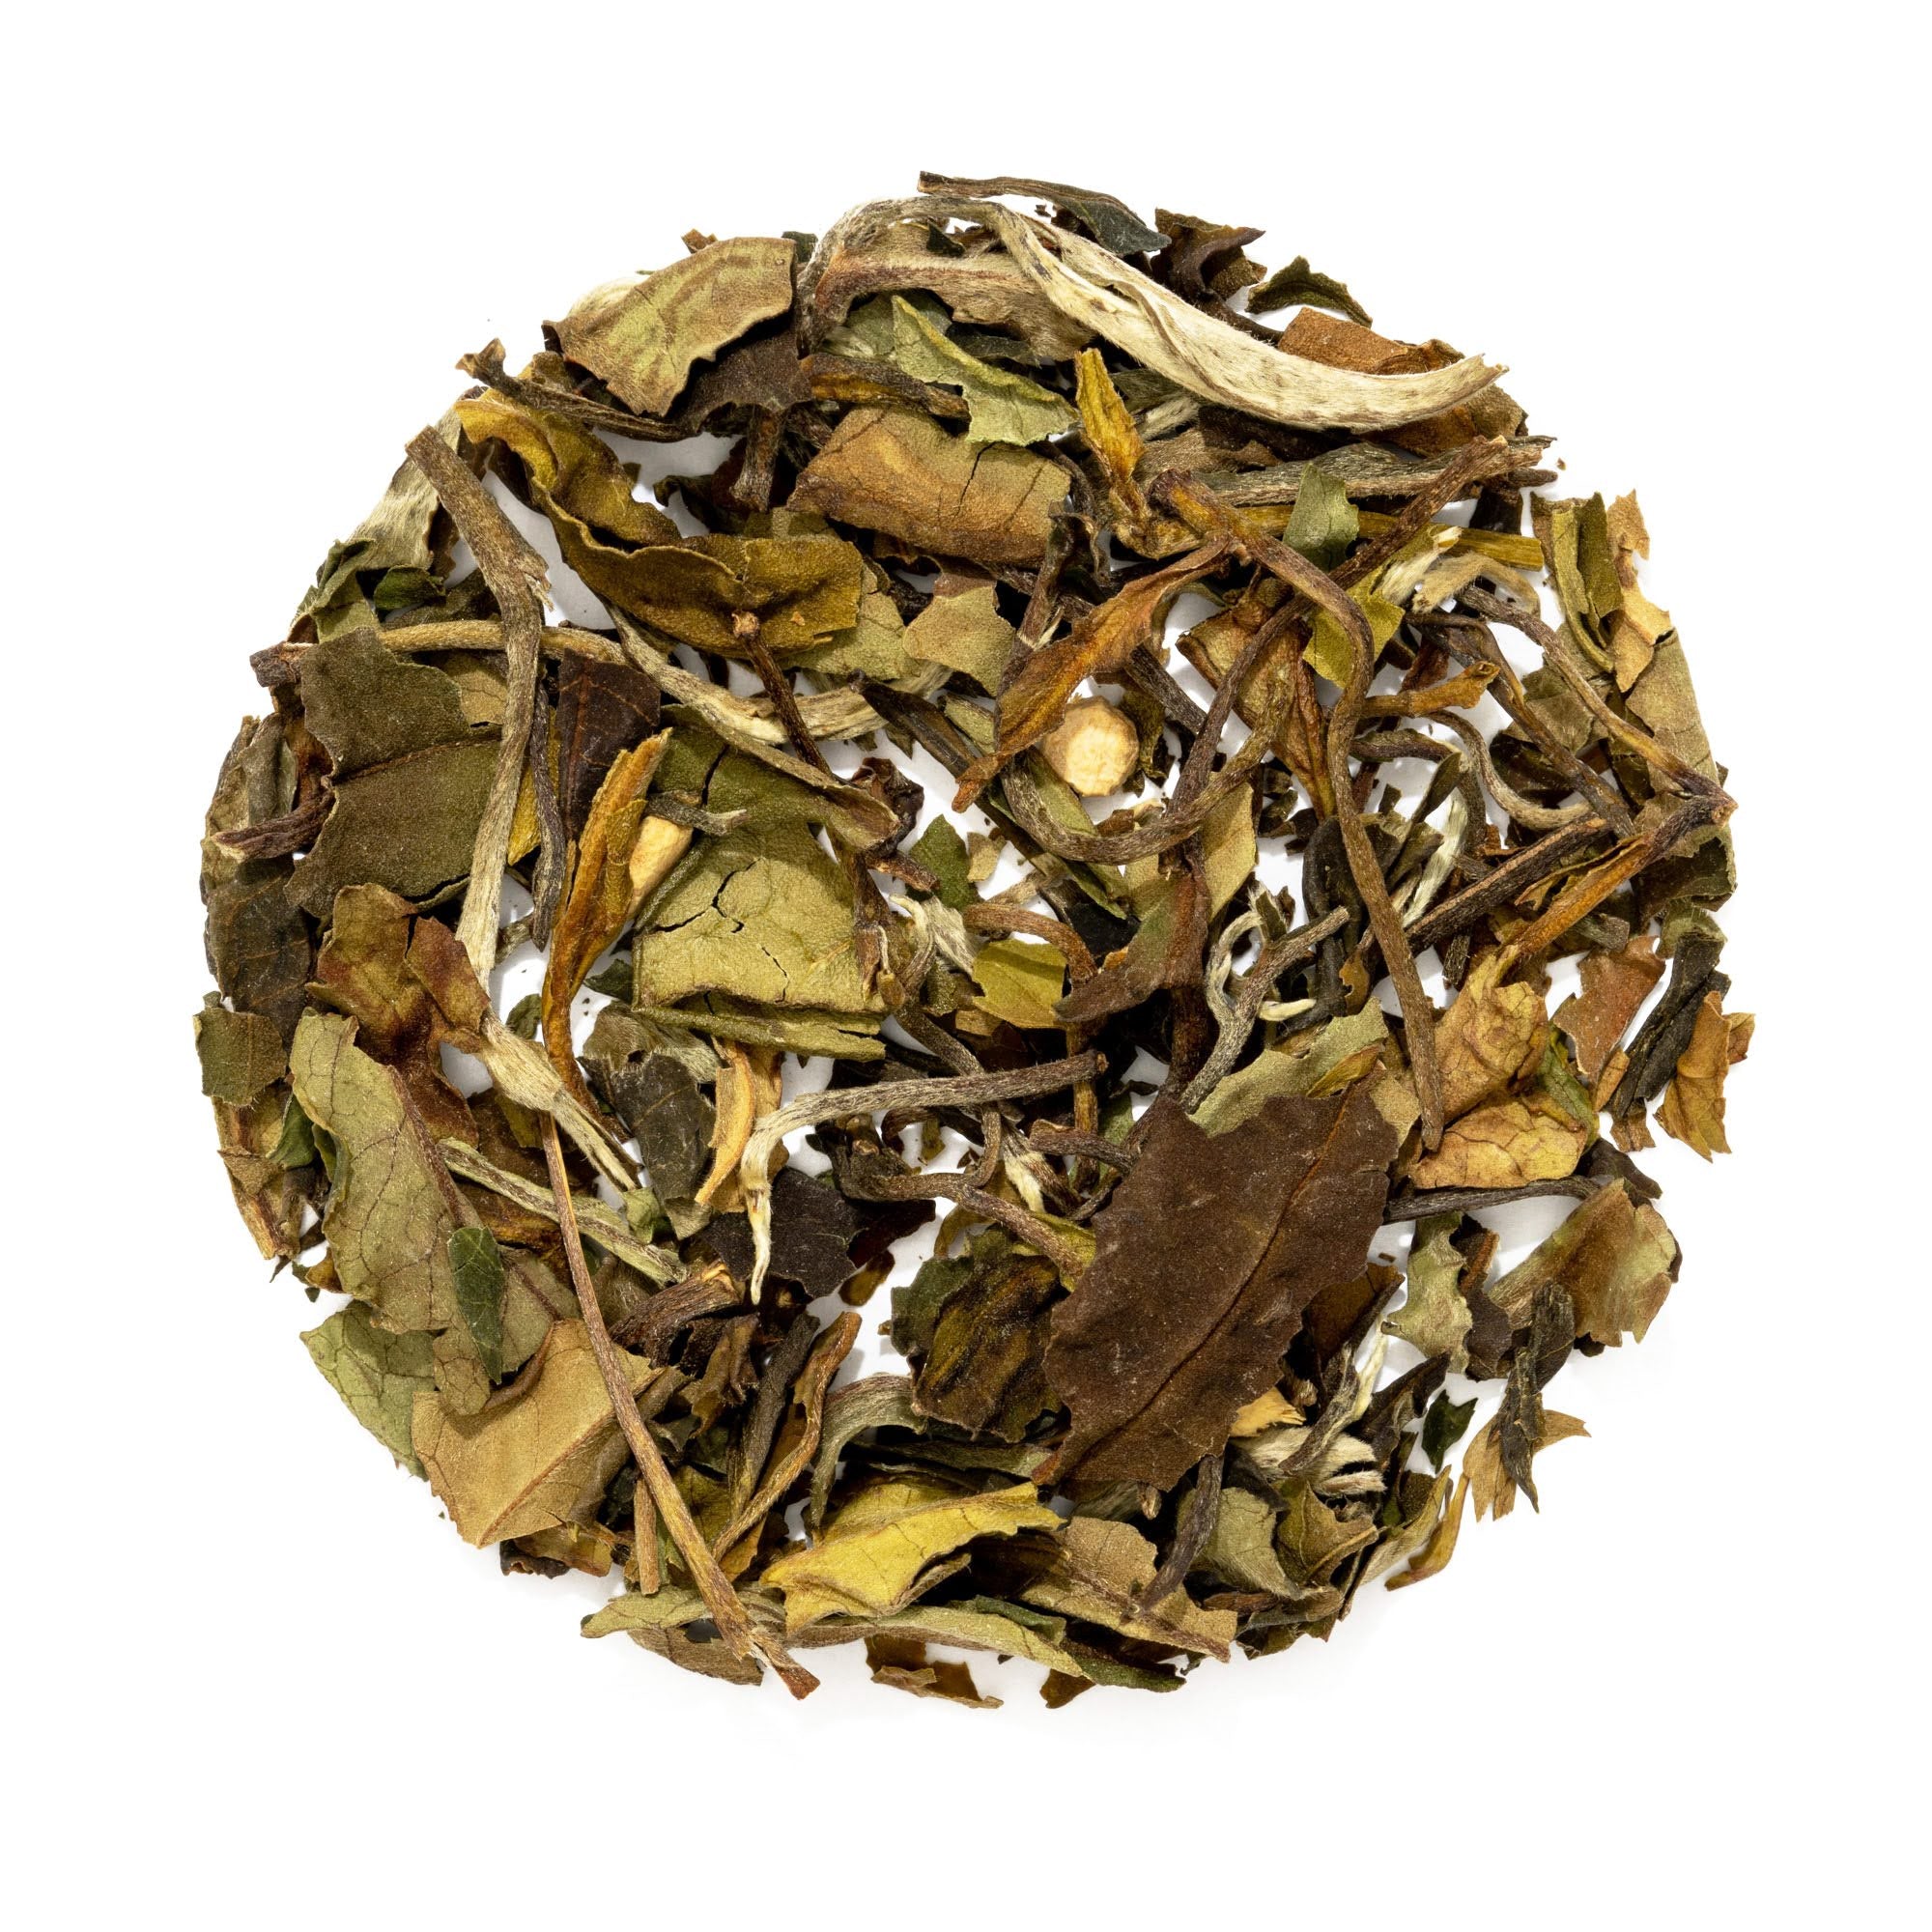 Organic White Peach - Premium Loose Leaf White Tea - Fruity, Great For Hot & Iced Tea | Heavenly Tea Leaves